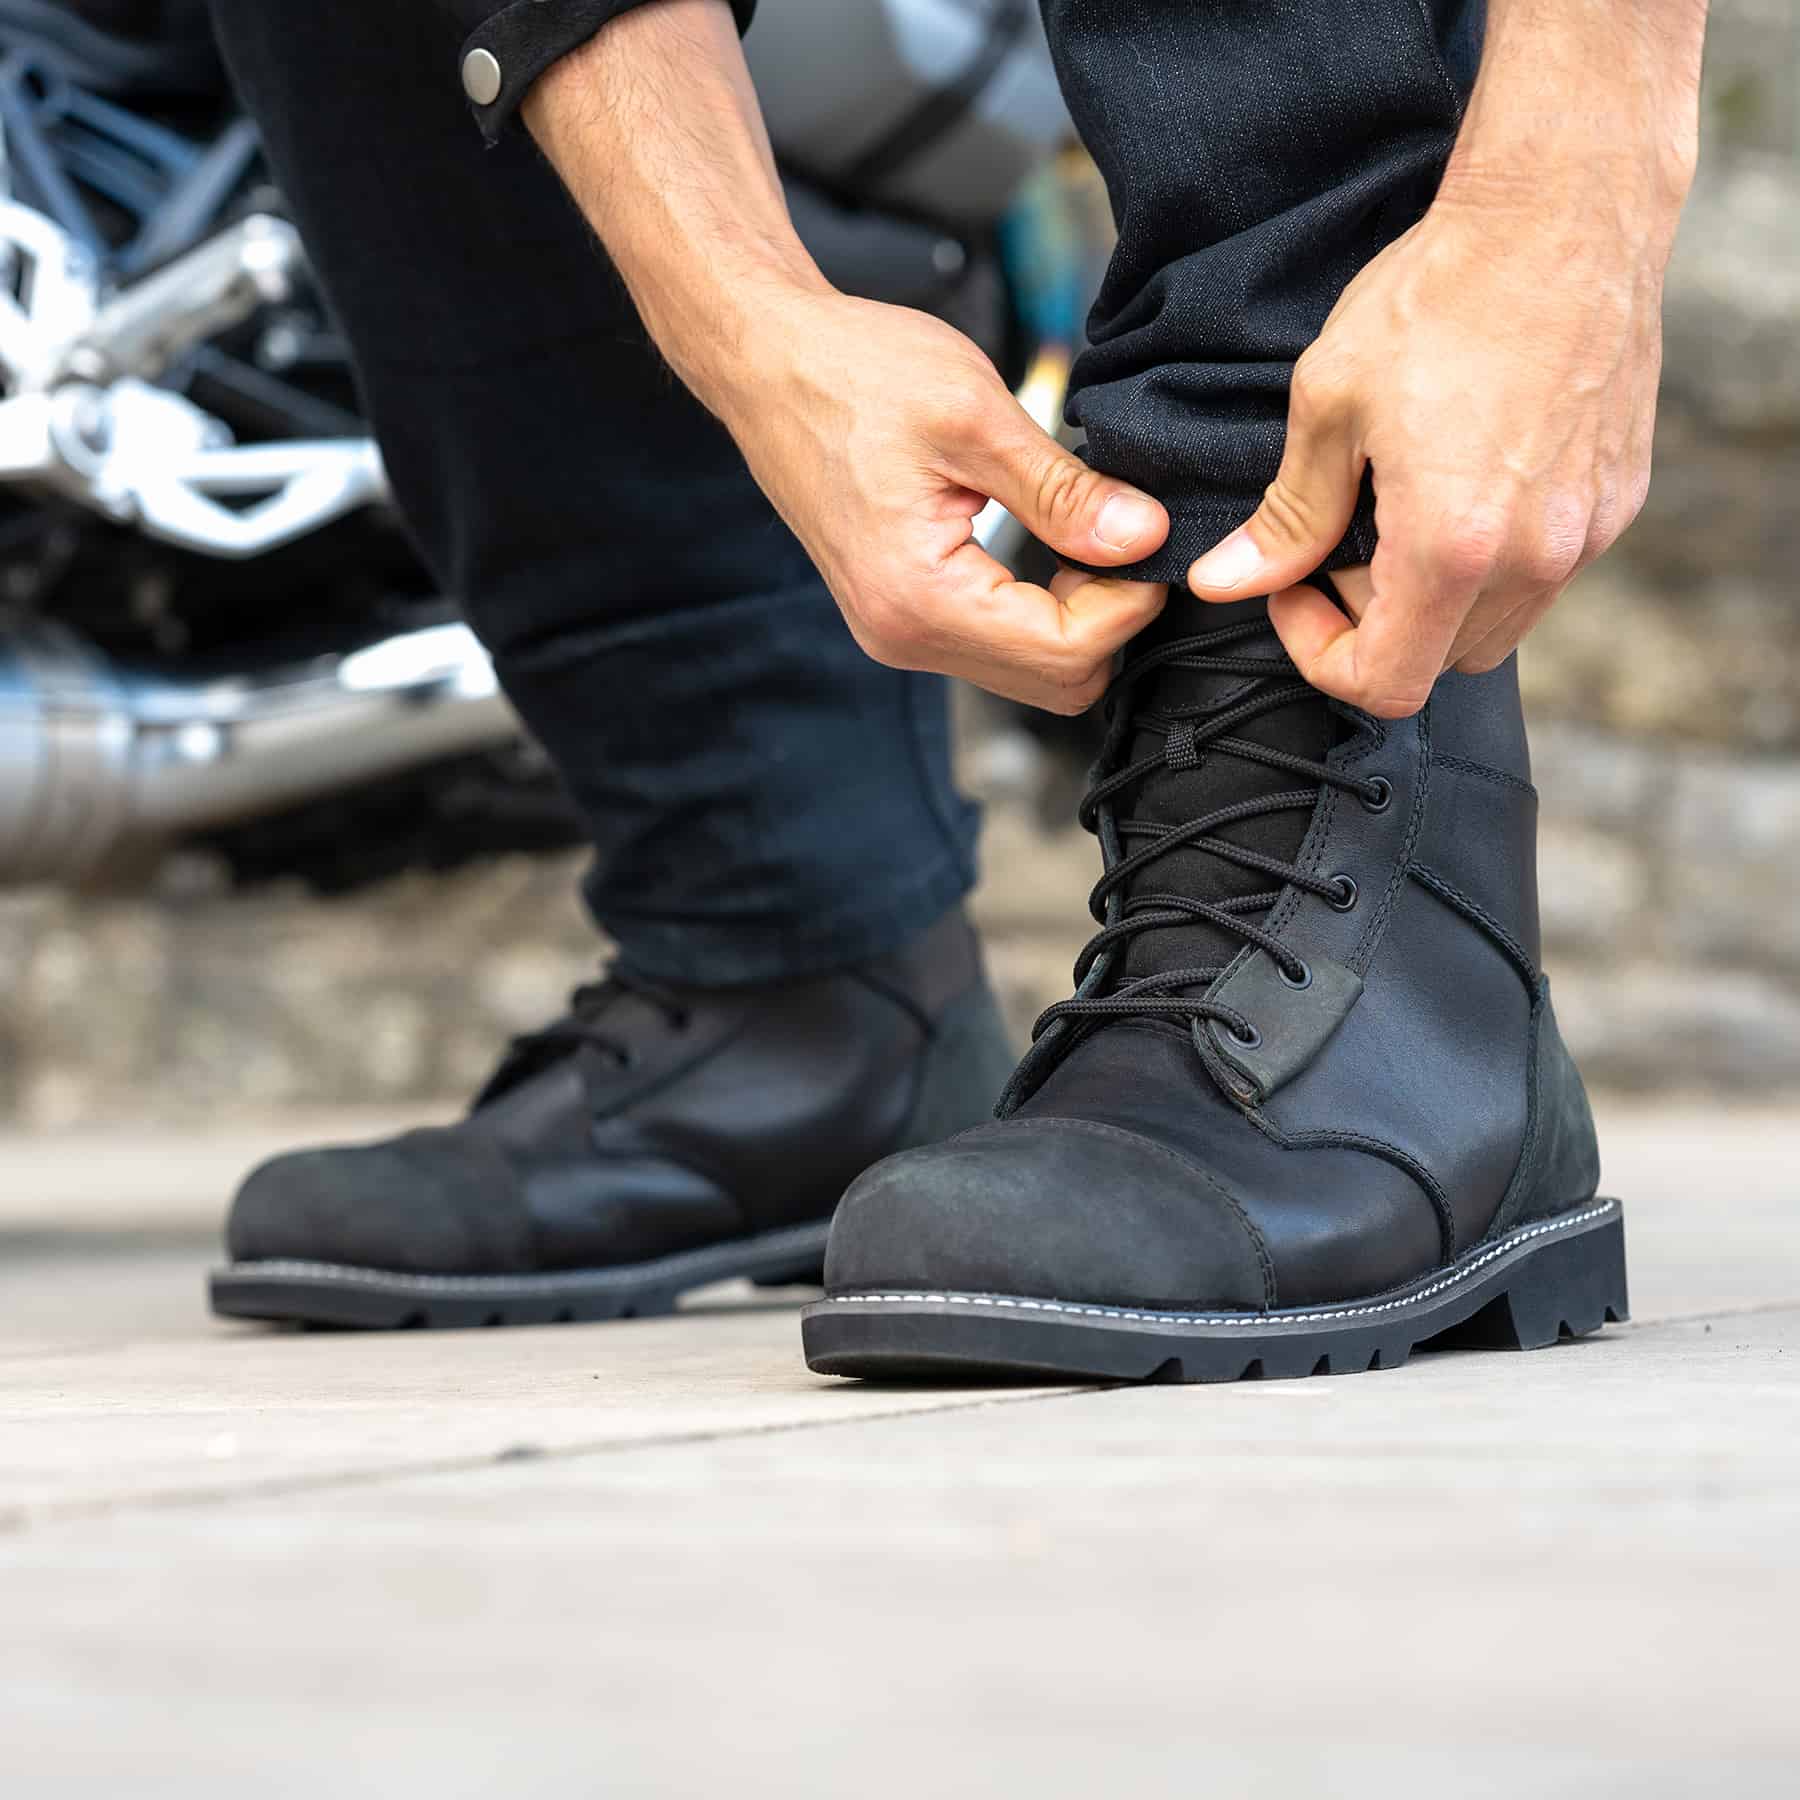 Merlin Bandit boot in black lifestyle image